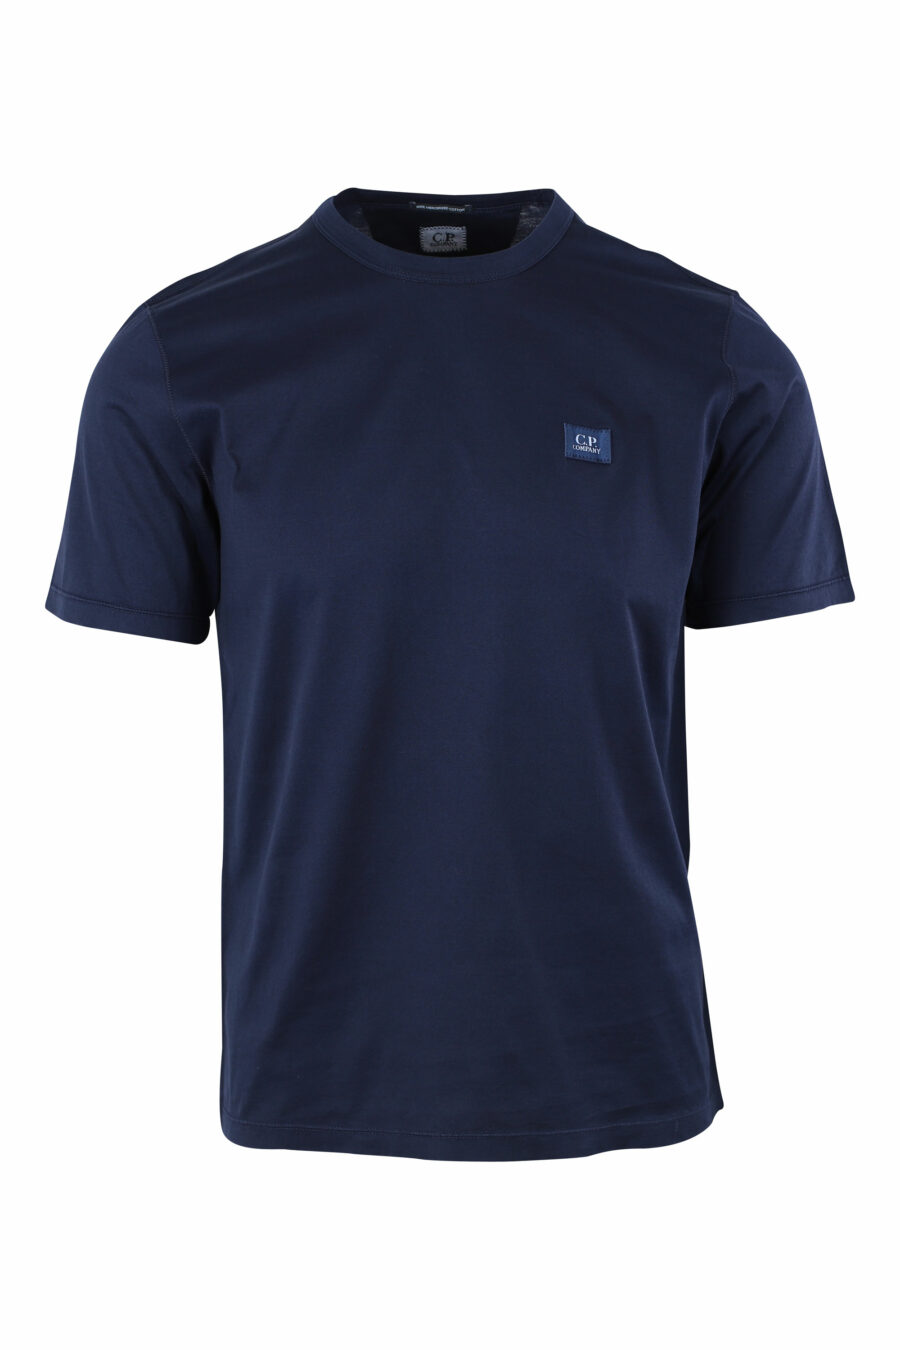 Dunkelblaues T-Shirt mit Mini-Logoaufnäher - IMG 9651